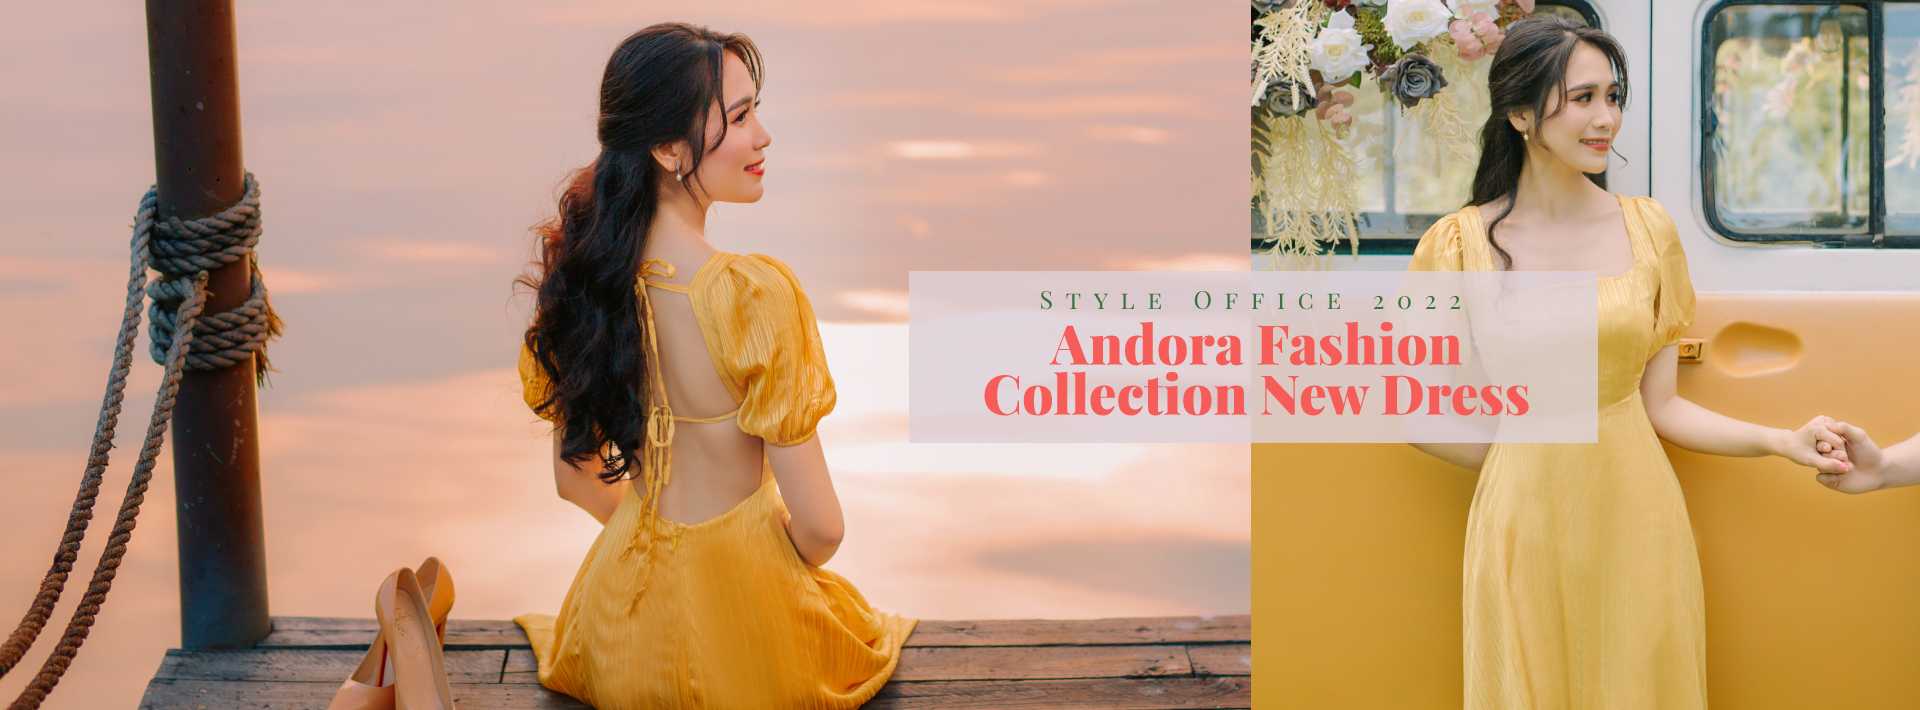 Andora Fashion Collection New Dress 2022